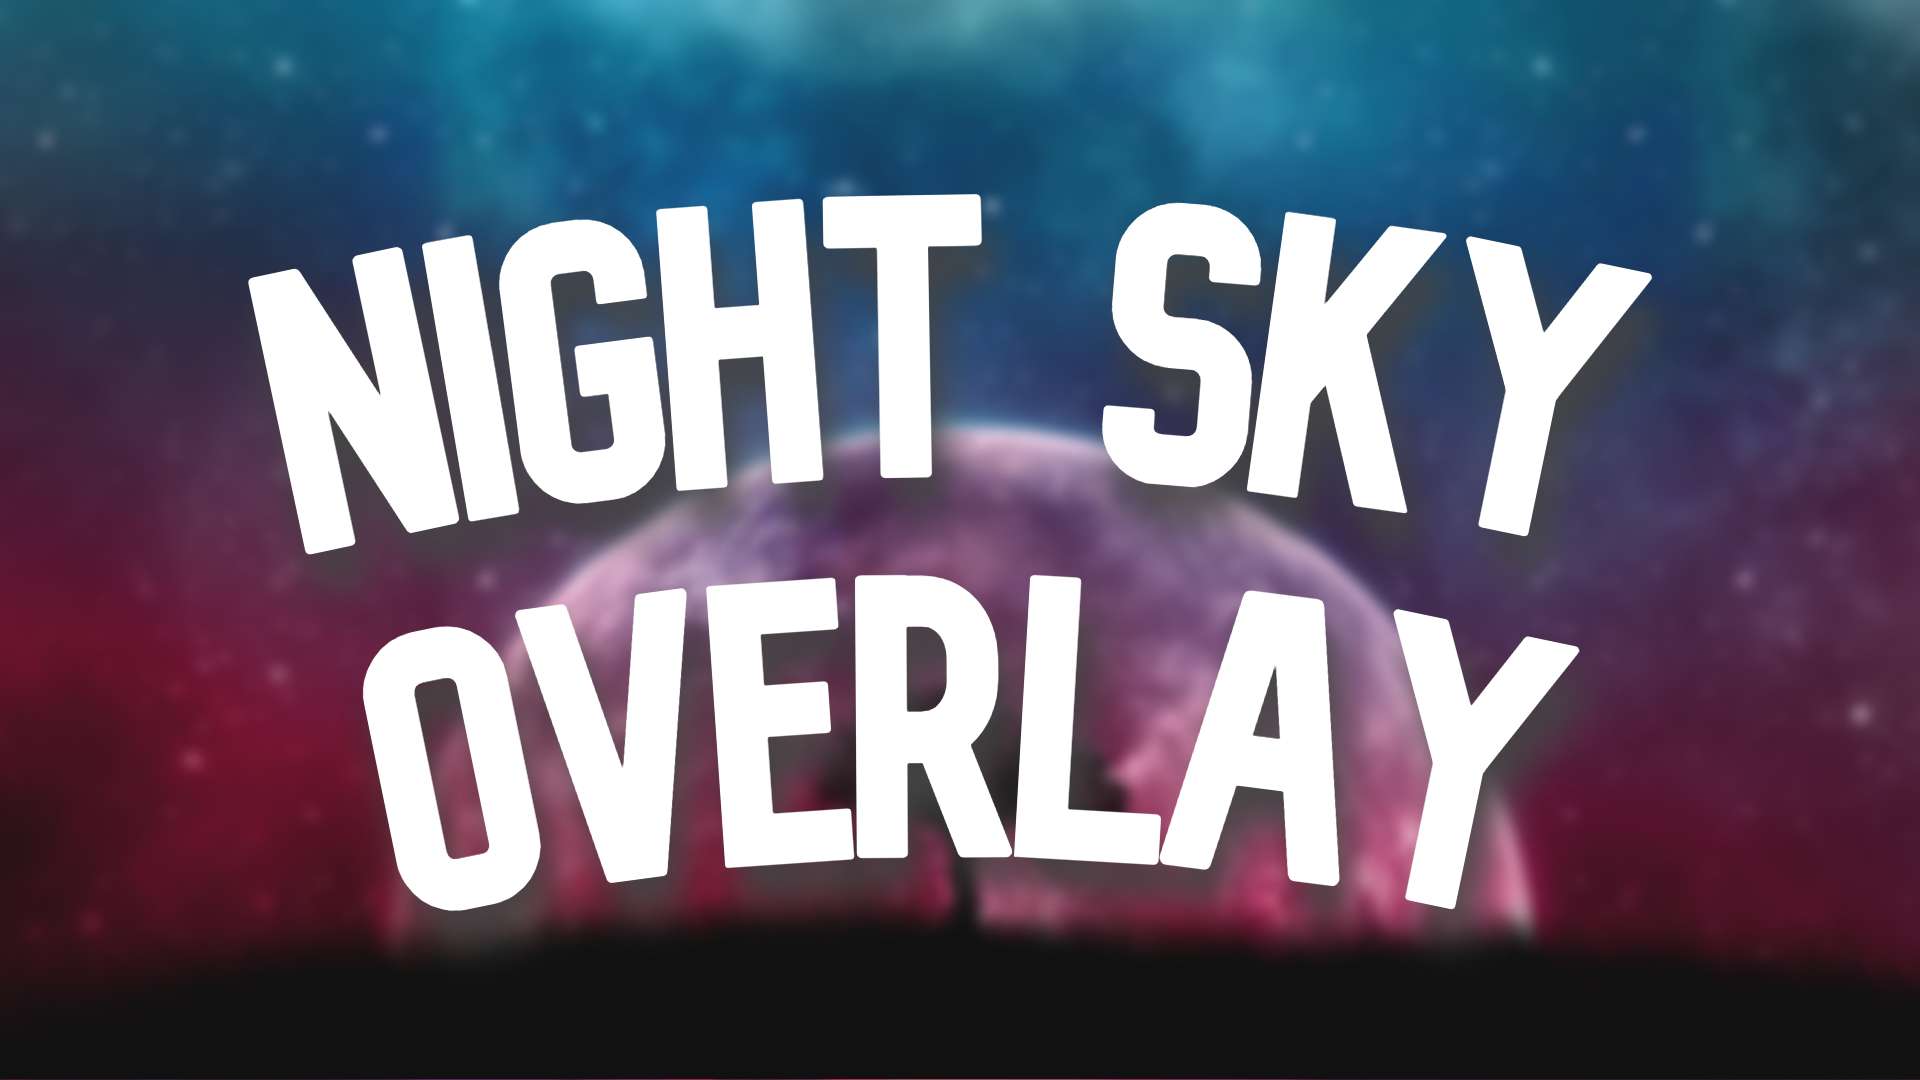 Night Sky Overlay #10 16x by rh56 on PvPRP